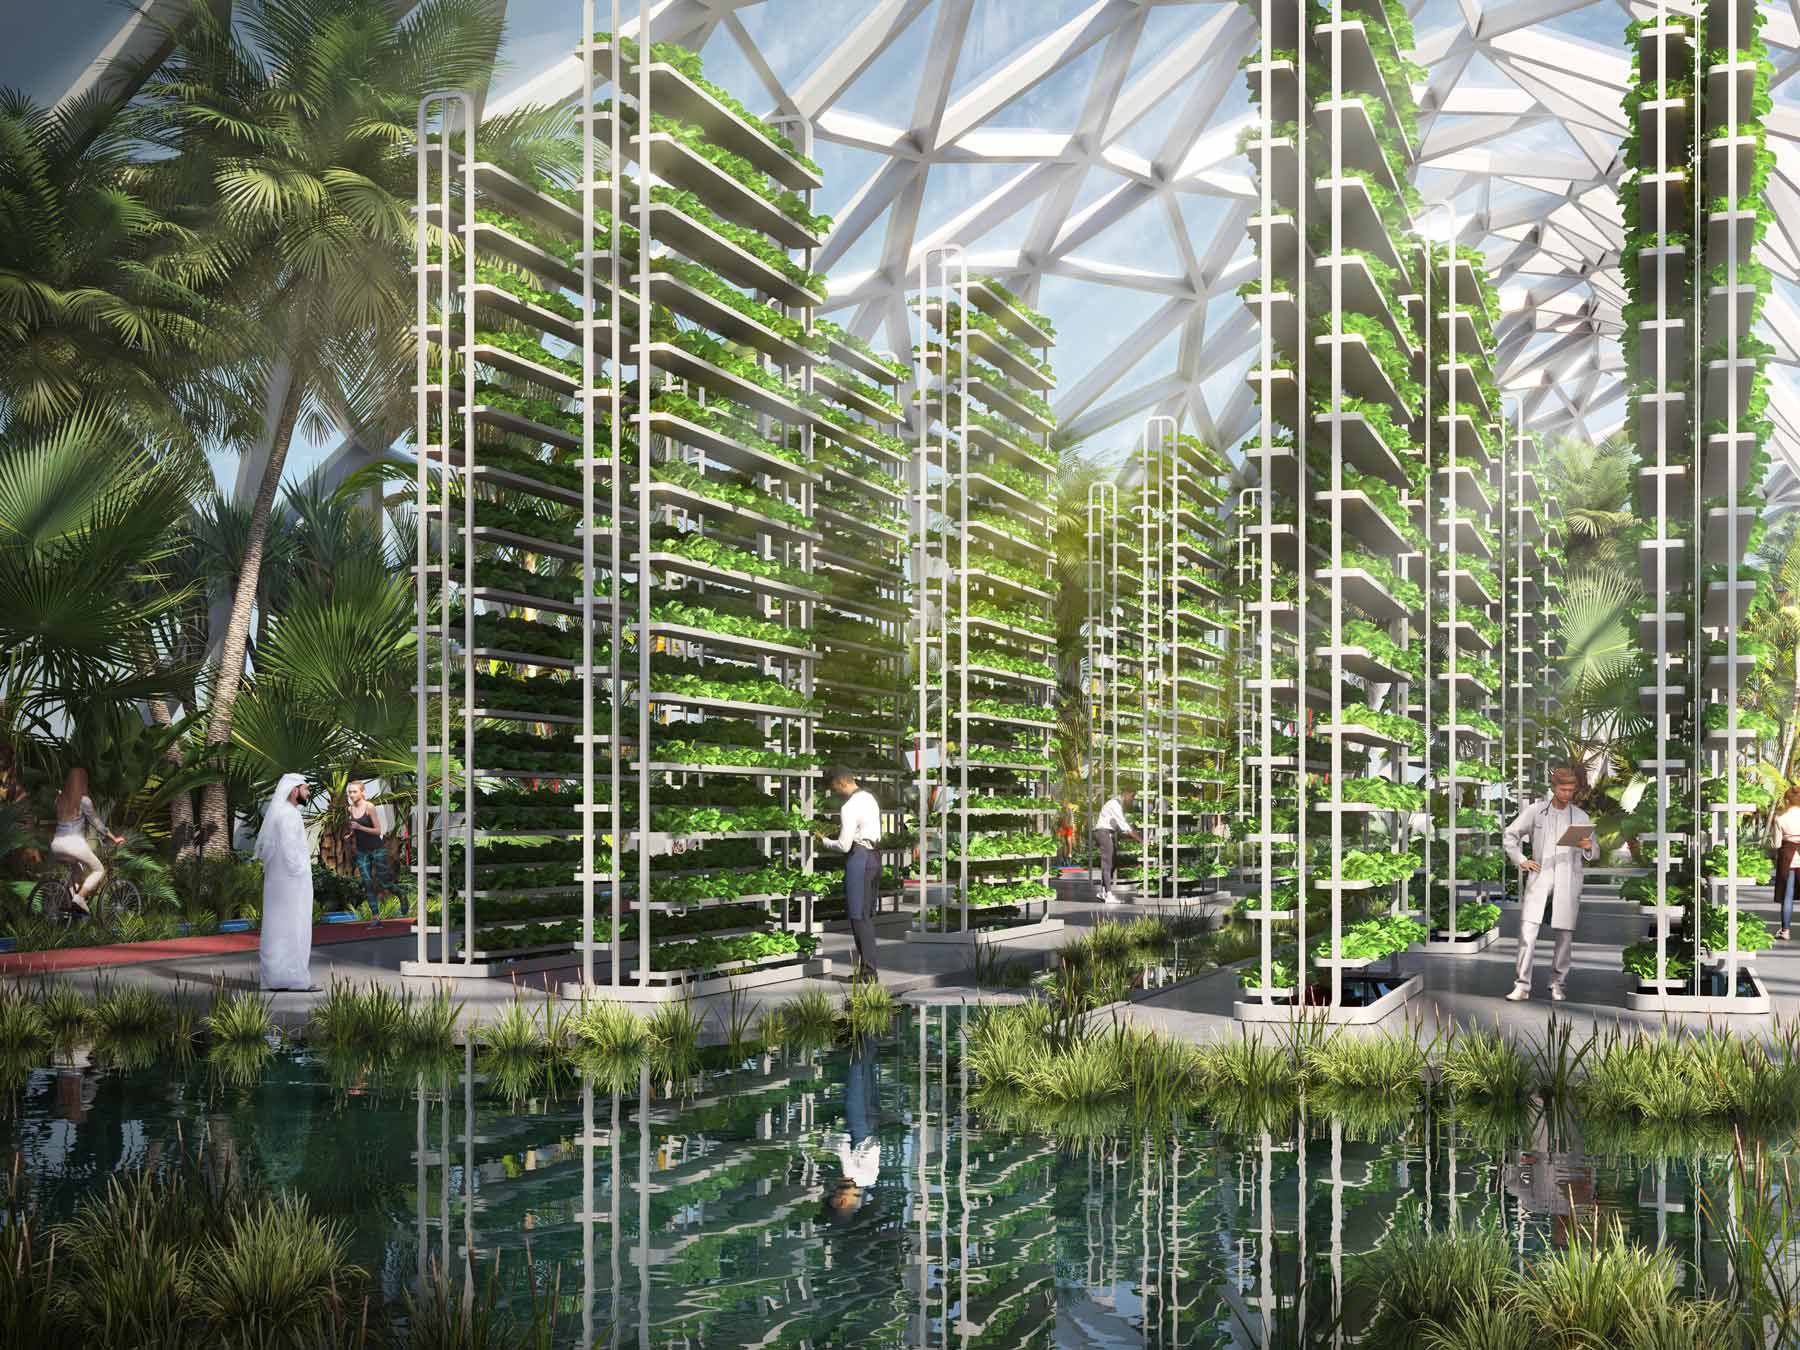 designs unveiled for dubai mangroves, world’s largest coastal regeneration project